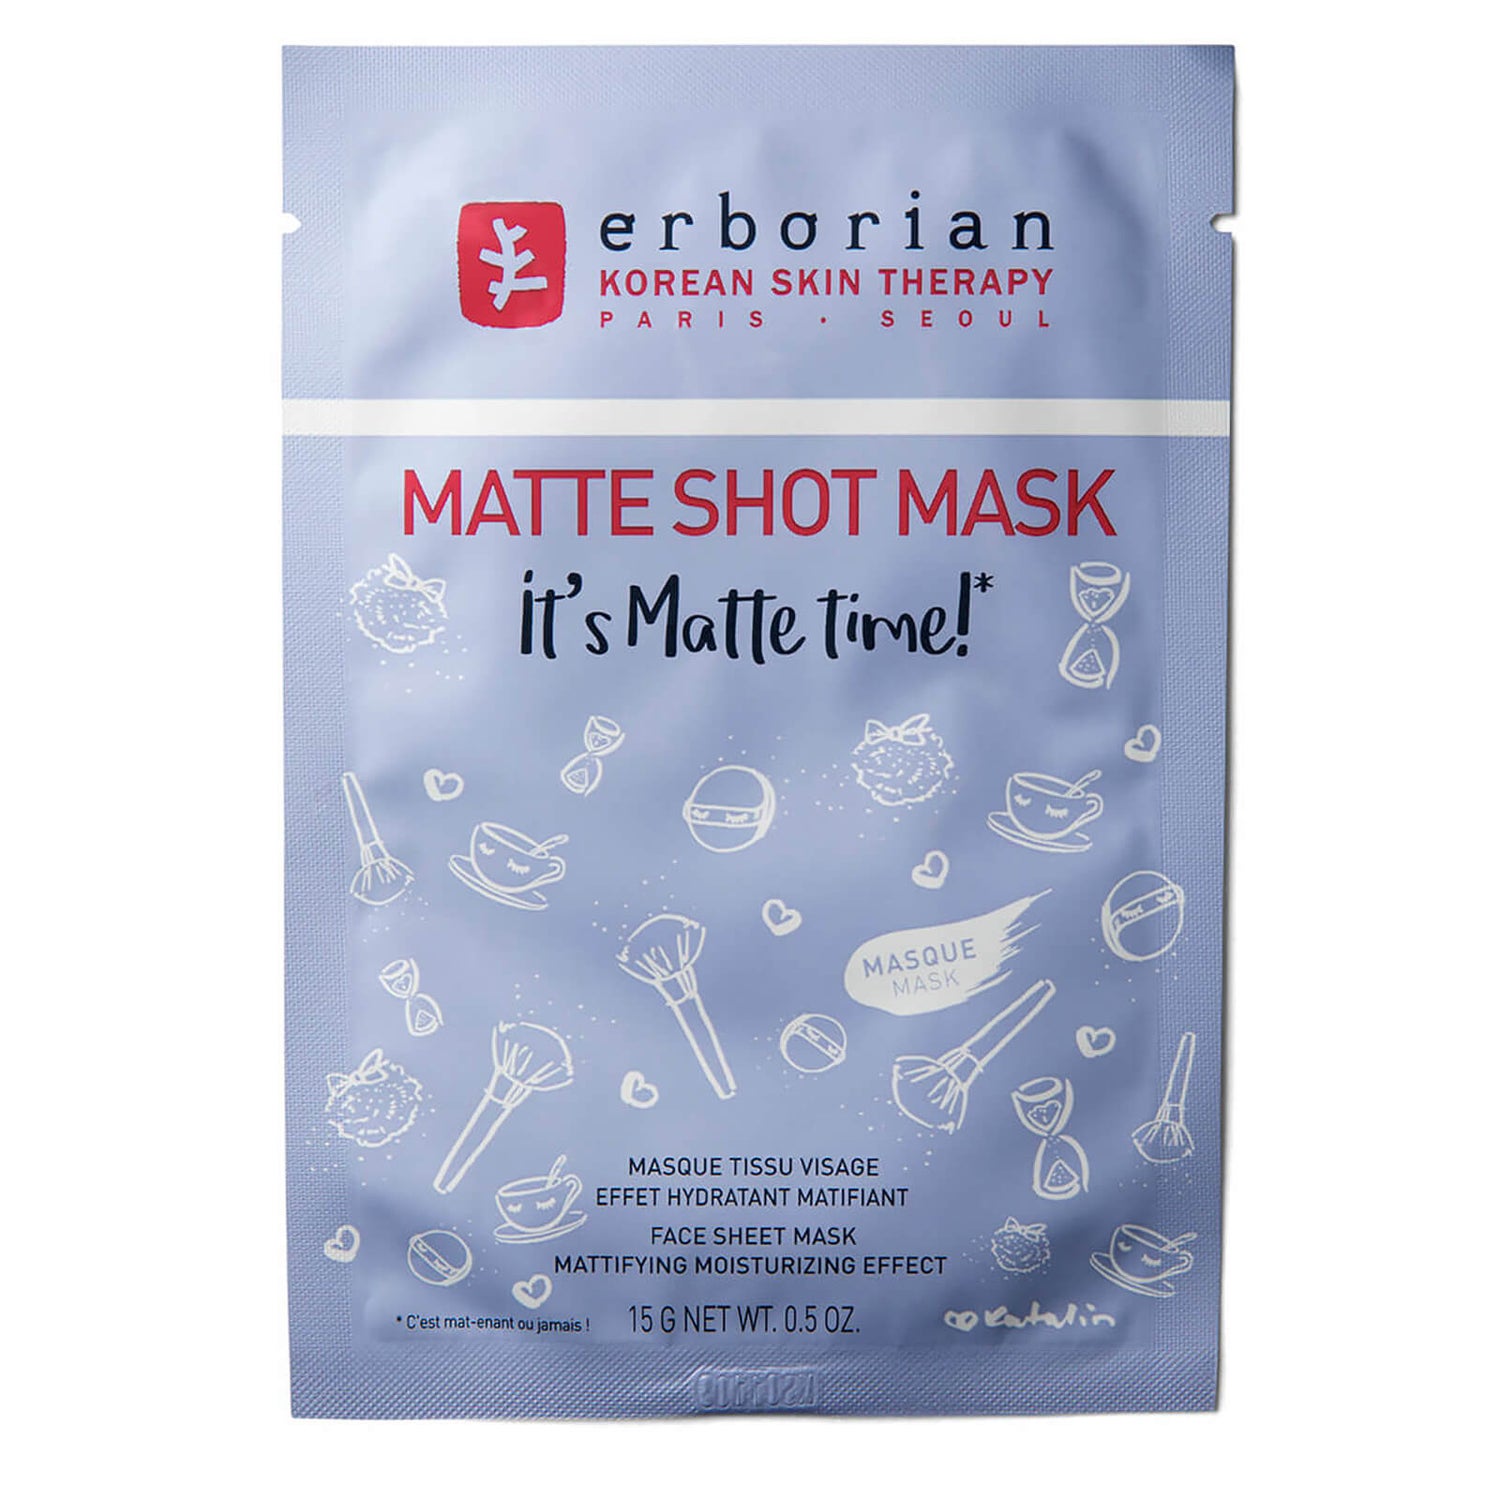 Matte Shot Mask